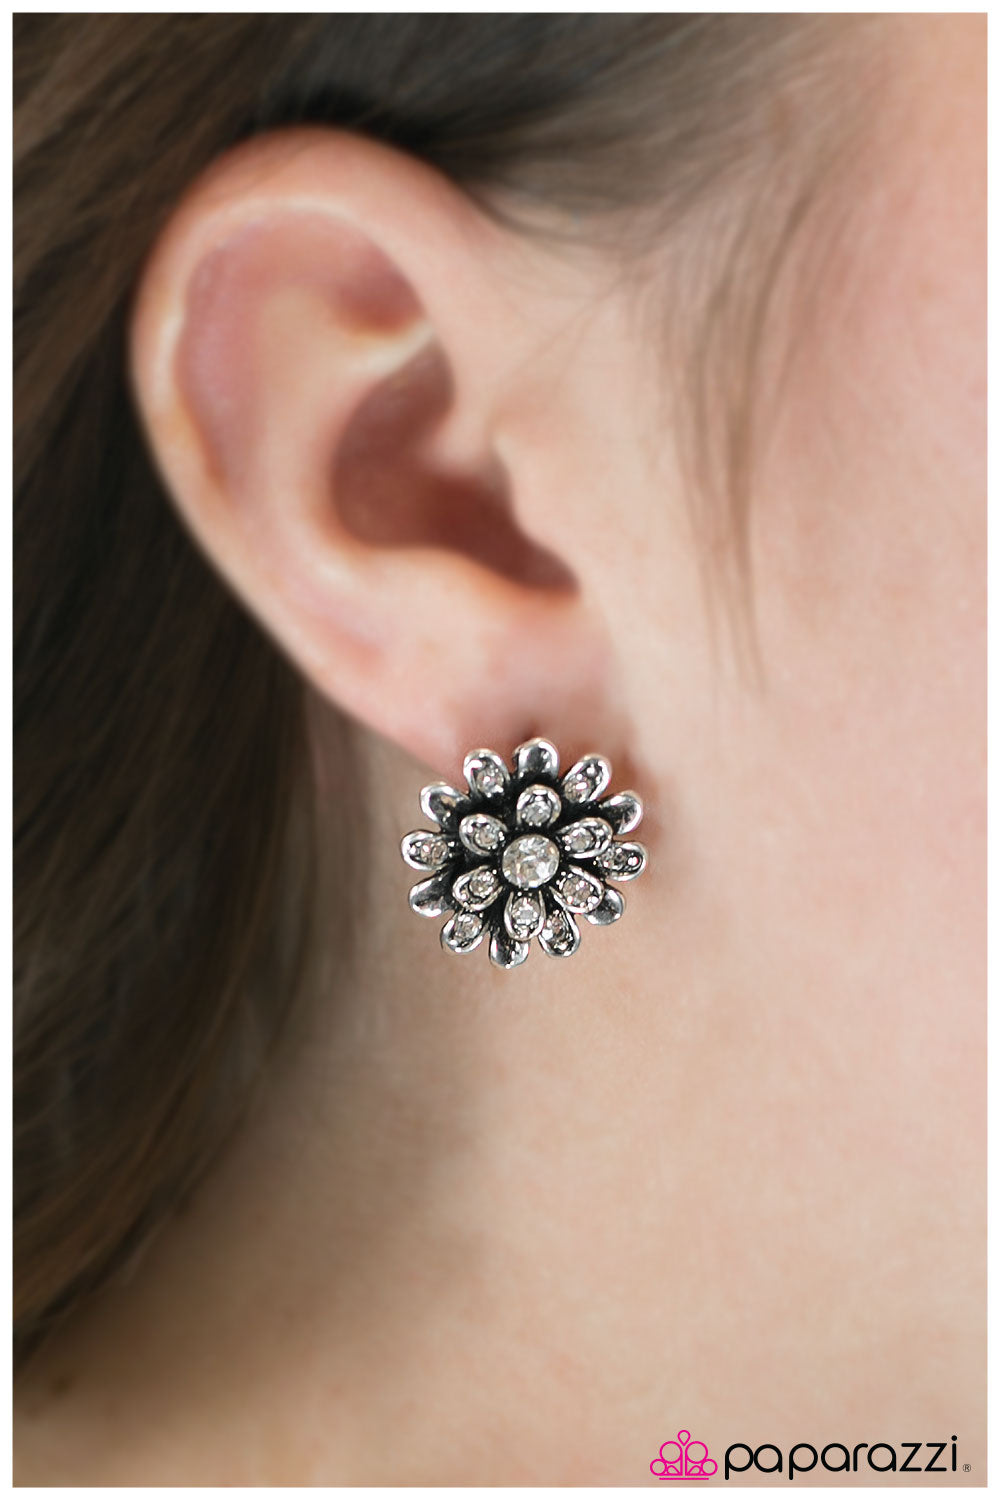 Always In Bloom - White Paparazzi earrings